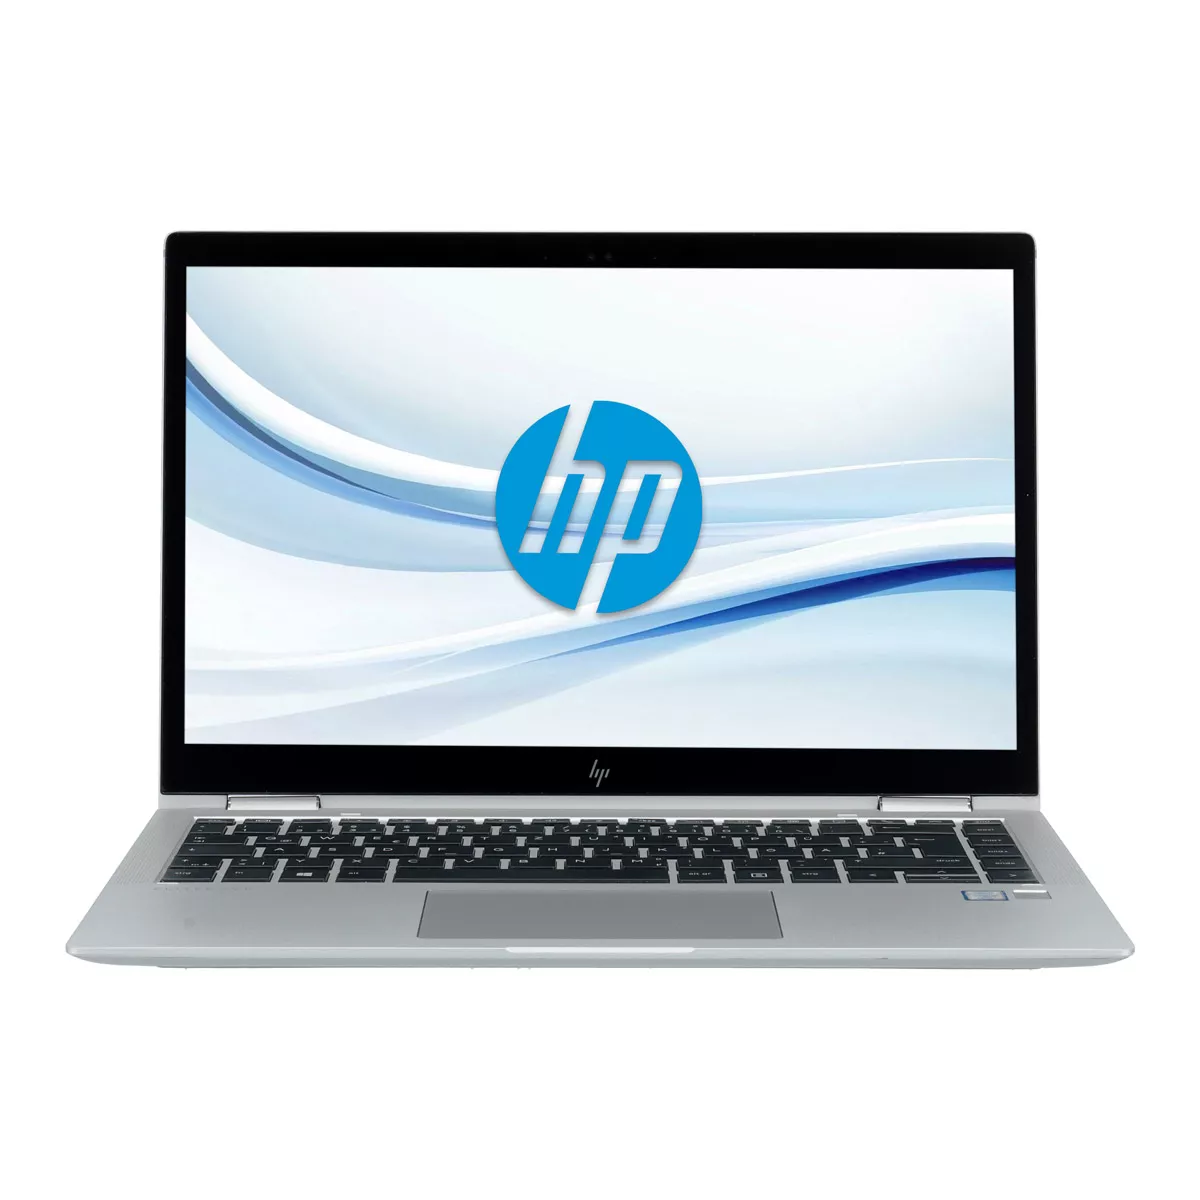 HP EliteBook x360 1040 G6 Core i5 8365U 16 GB 500 GB M.2 nVME SSD Touch Webcam B